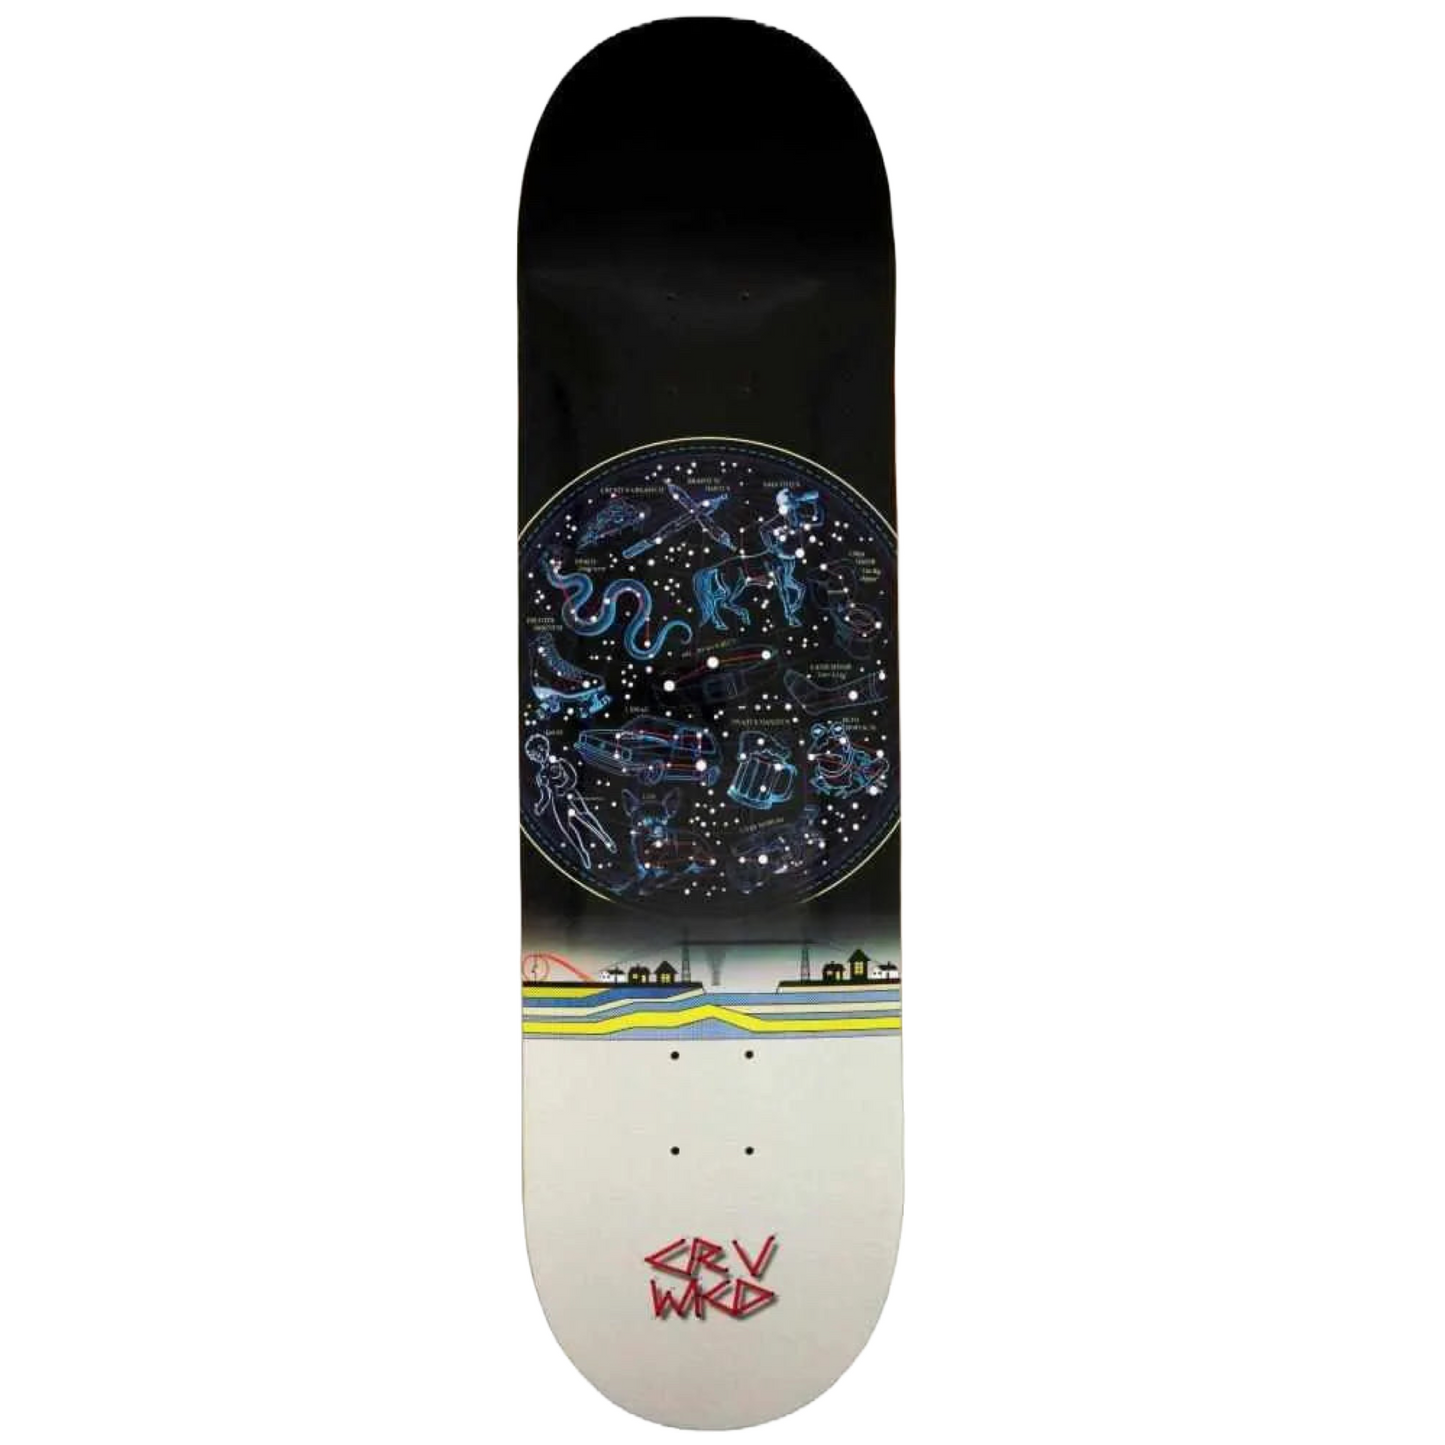 Carve Wicked Skateboards - ‘Zappa’ 8.5" Deck